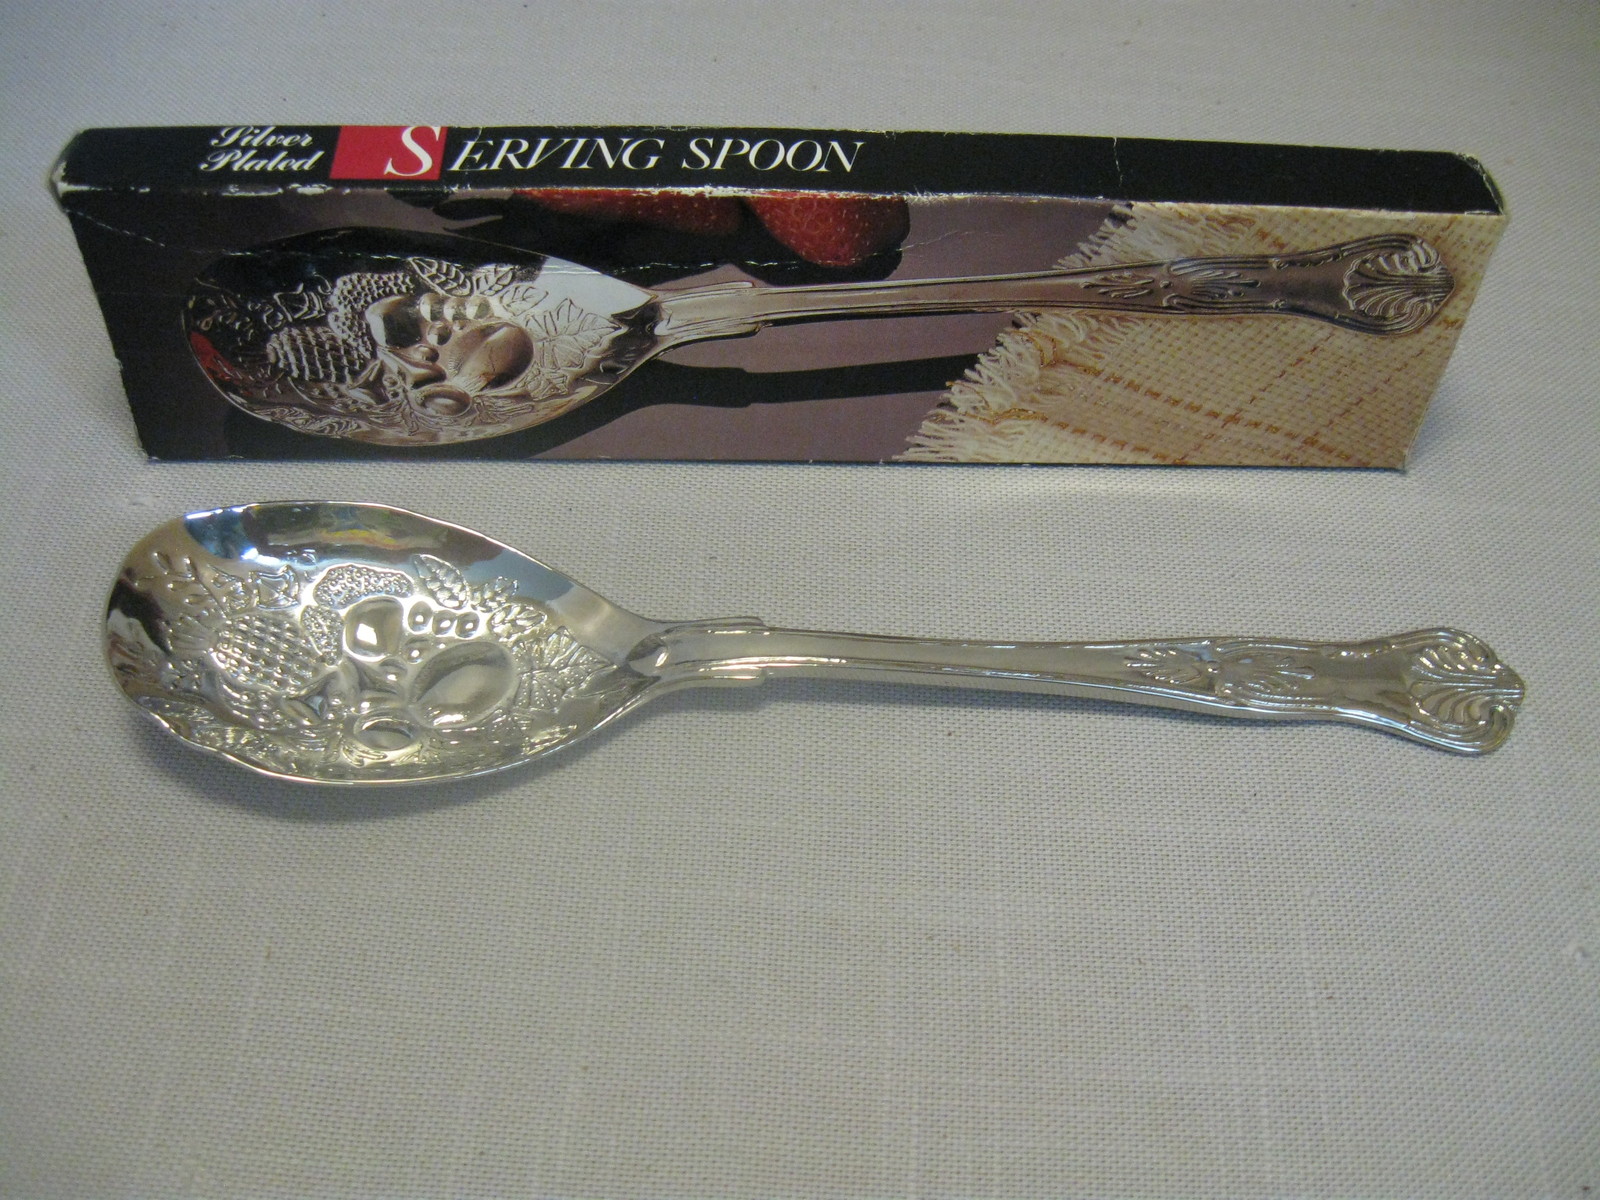 Primary image for Serving Spoon Silver Plate 8 3/4" long Fruit & Leaf Design Shell Design Handle 